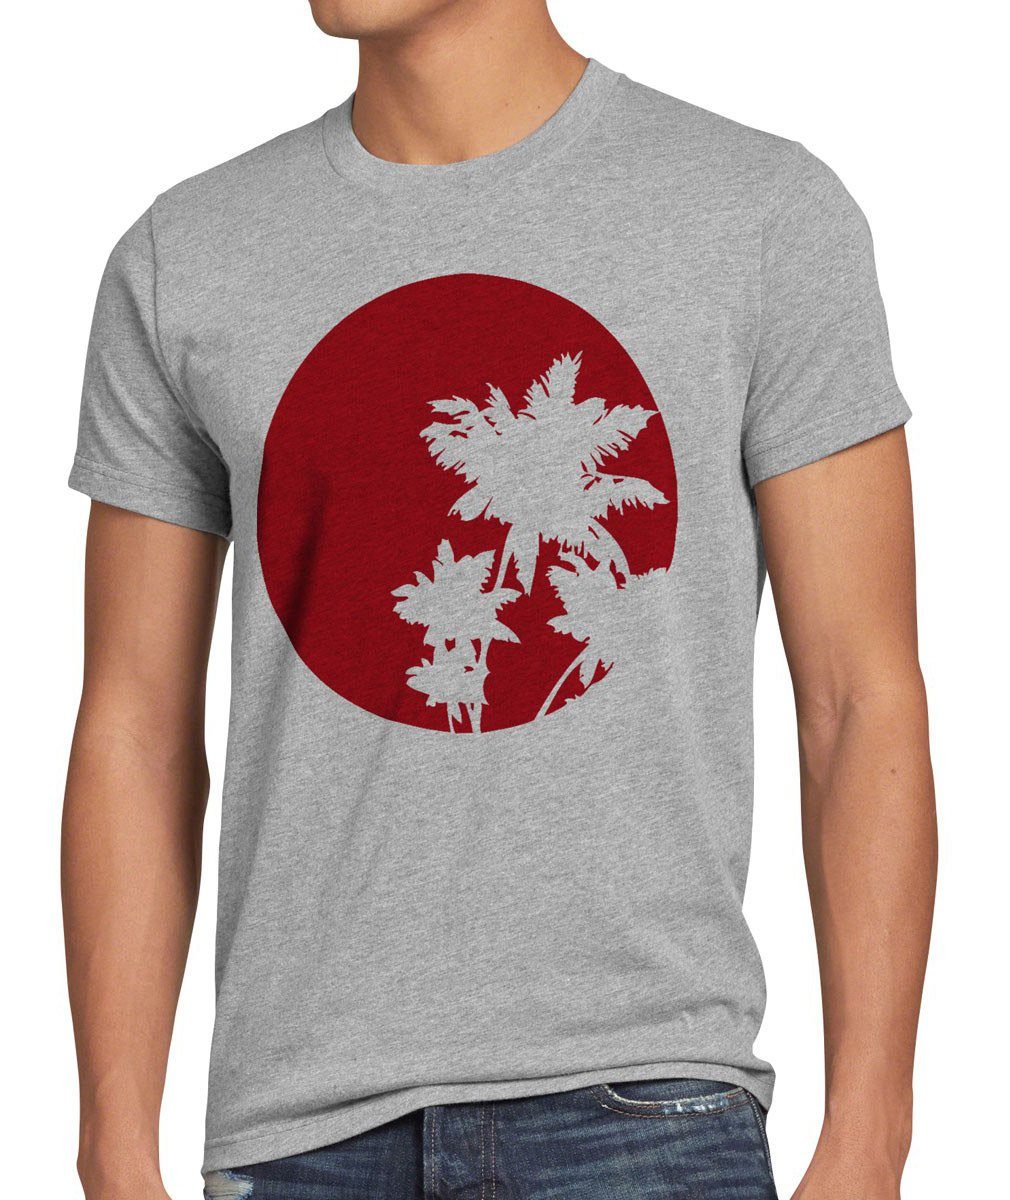 style3 Print-Shirt Herren T-Shirt Sonne sommer strand urlaub palmen insel summer ibiza mallorca top grau meliert